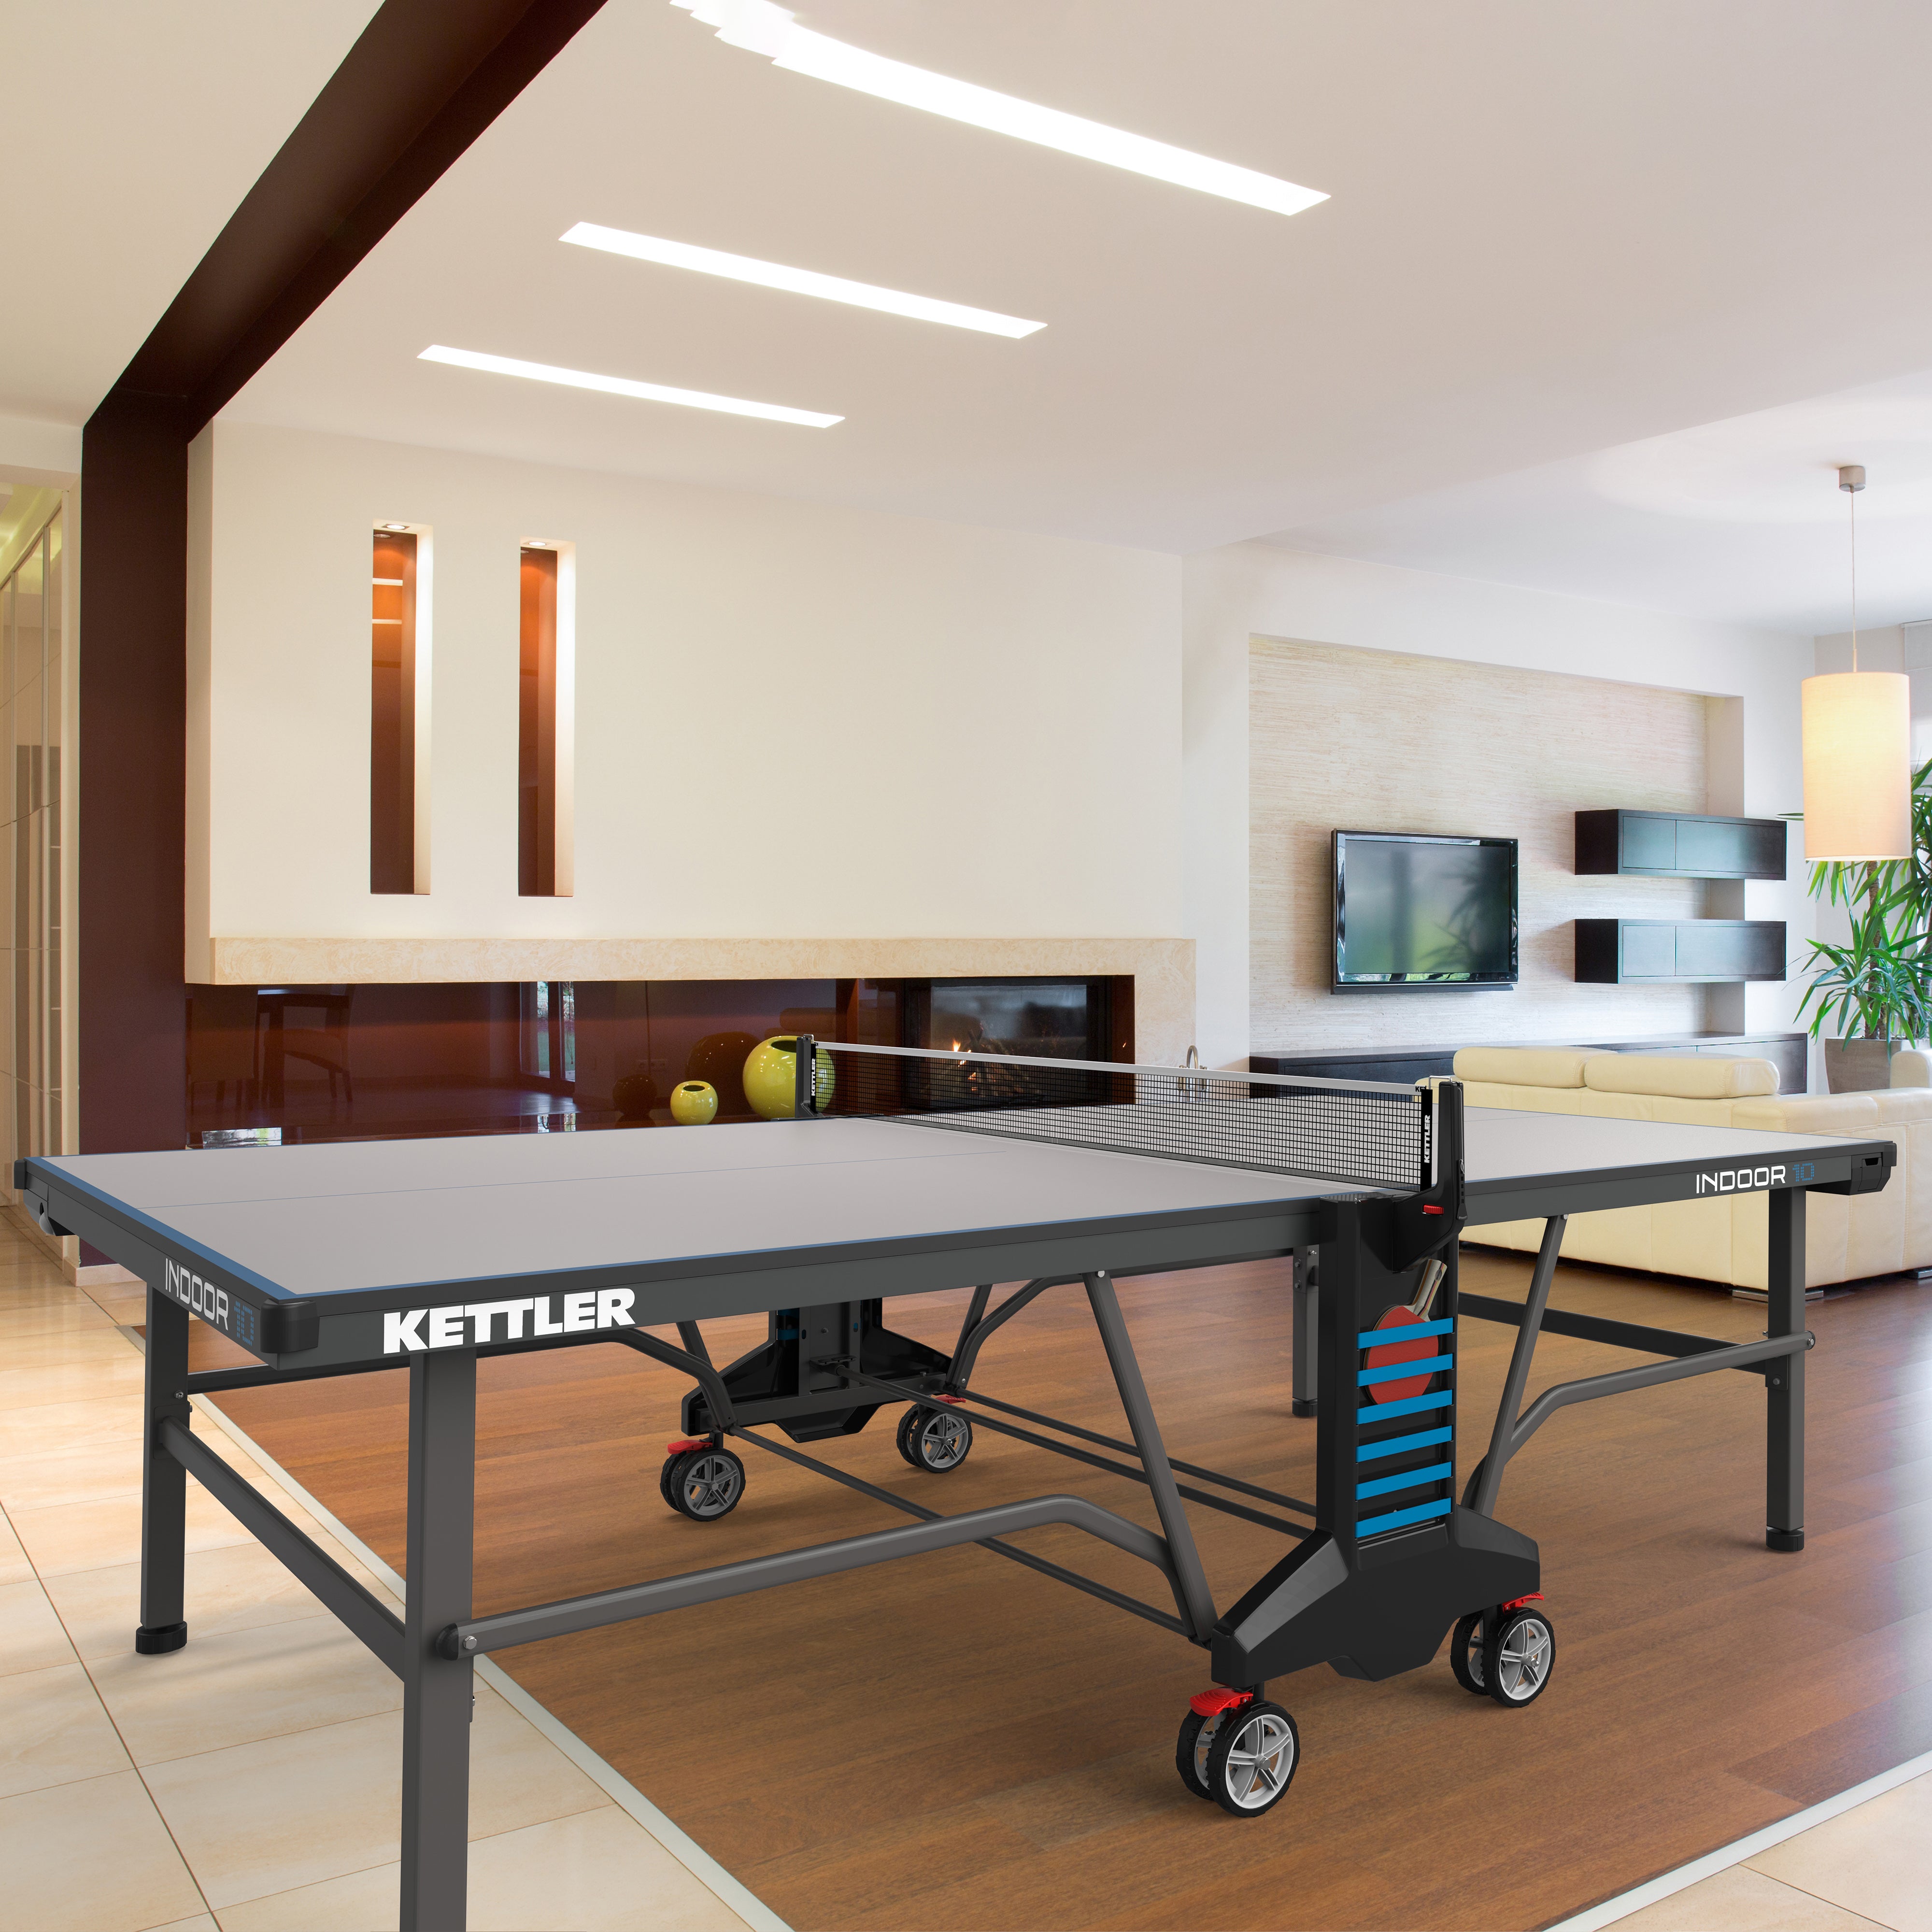 Indoor 10 Table Tennis Table